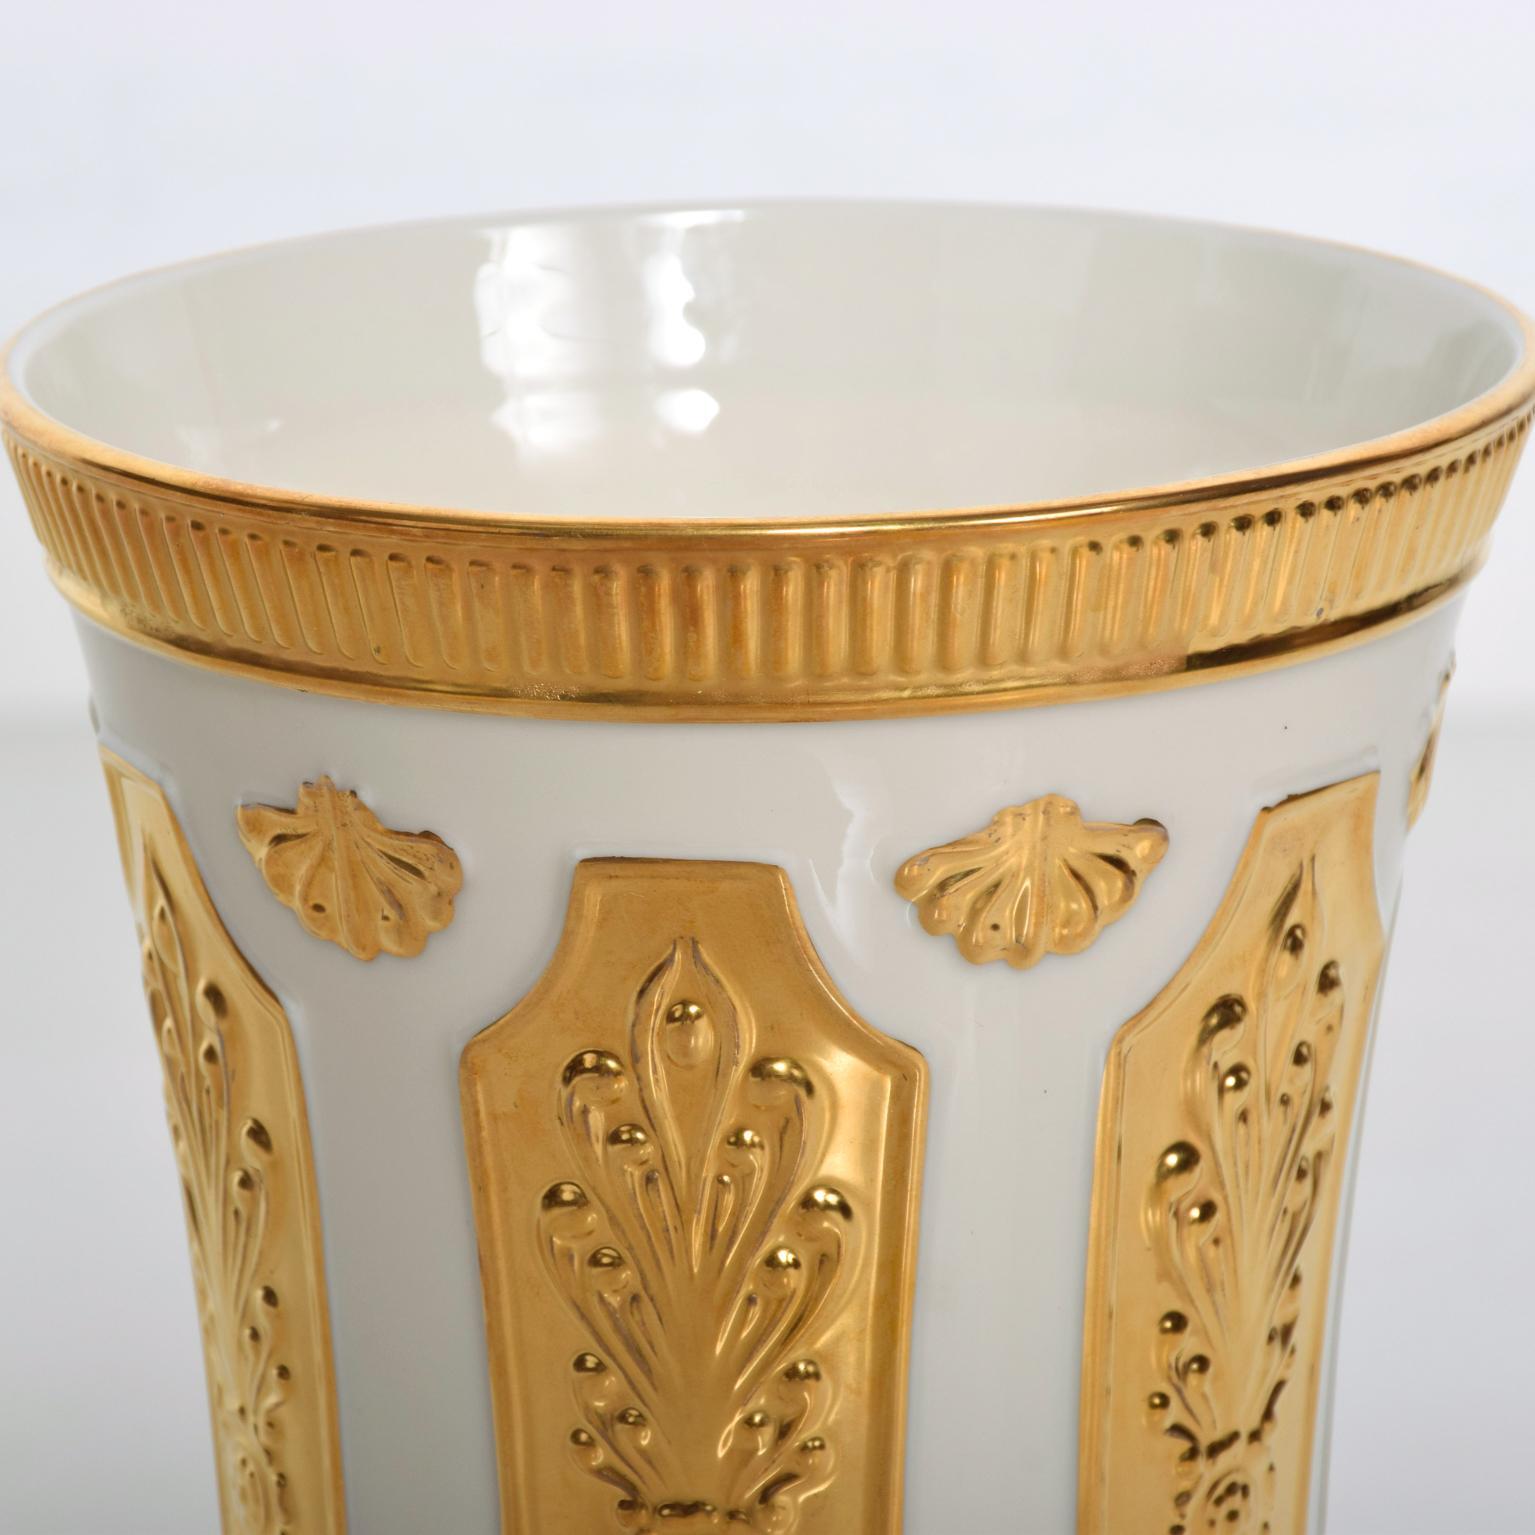 lenox vases with gold trim